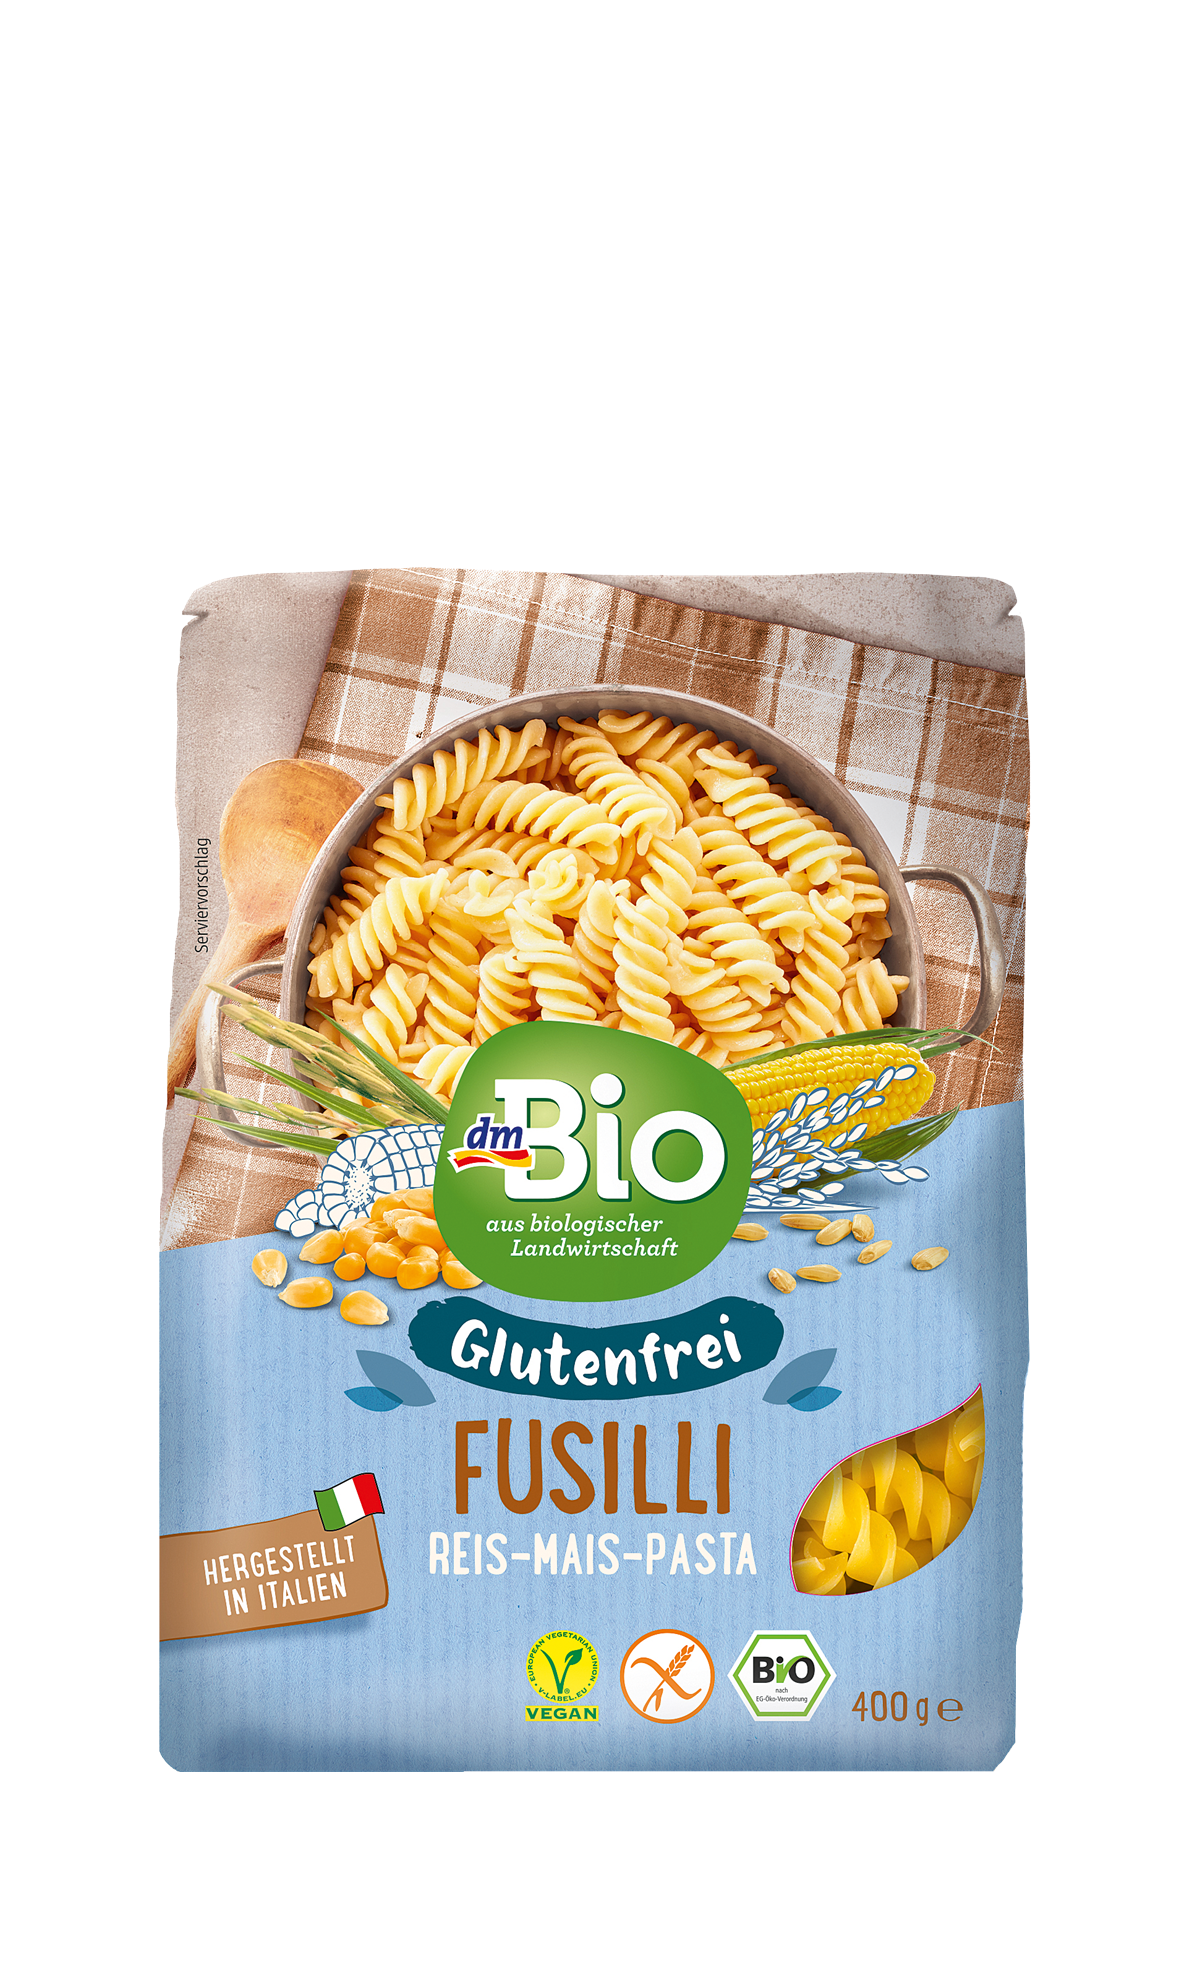 dmBio glutenfreie Fusilli (400 g): 2,35 €